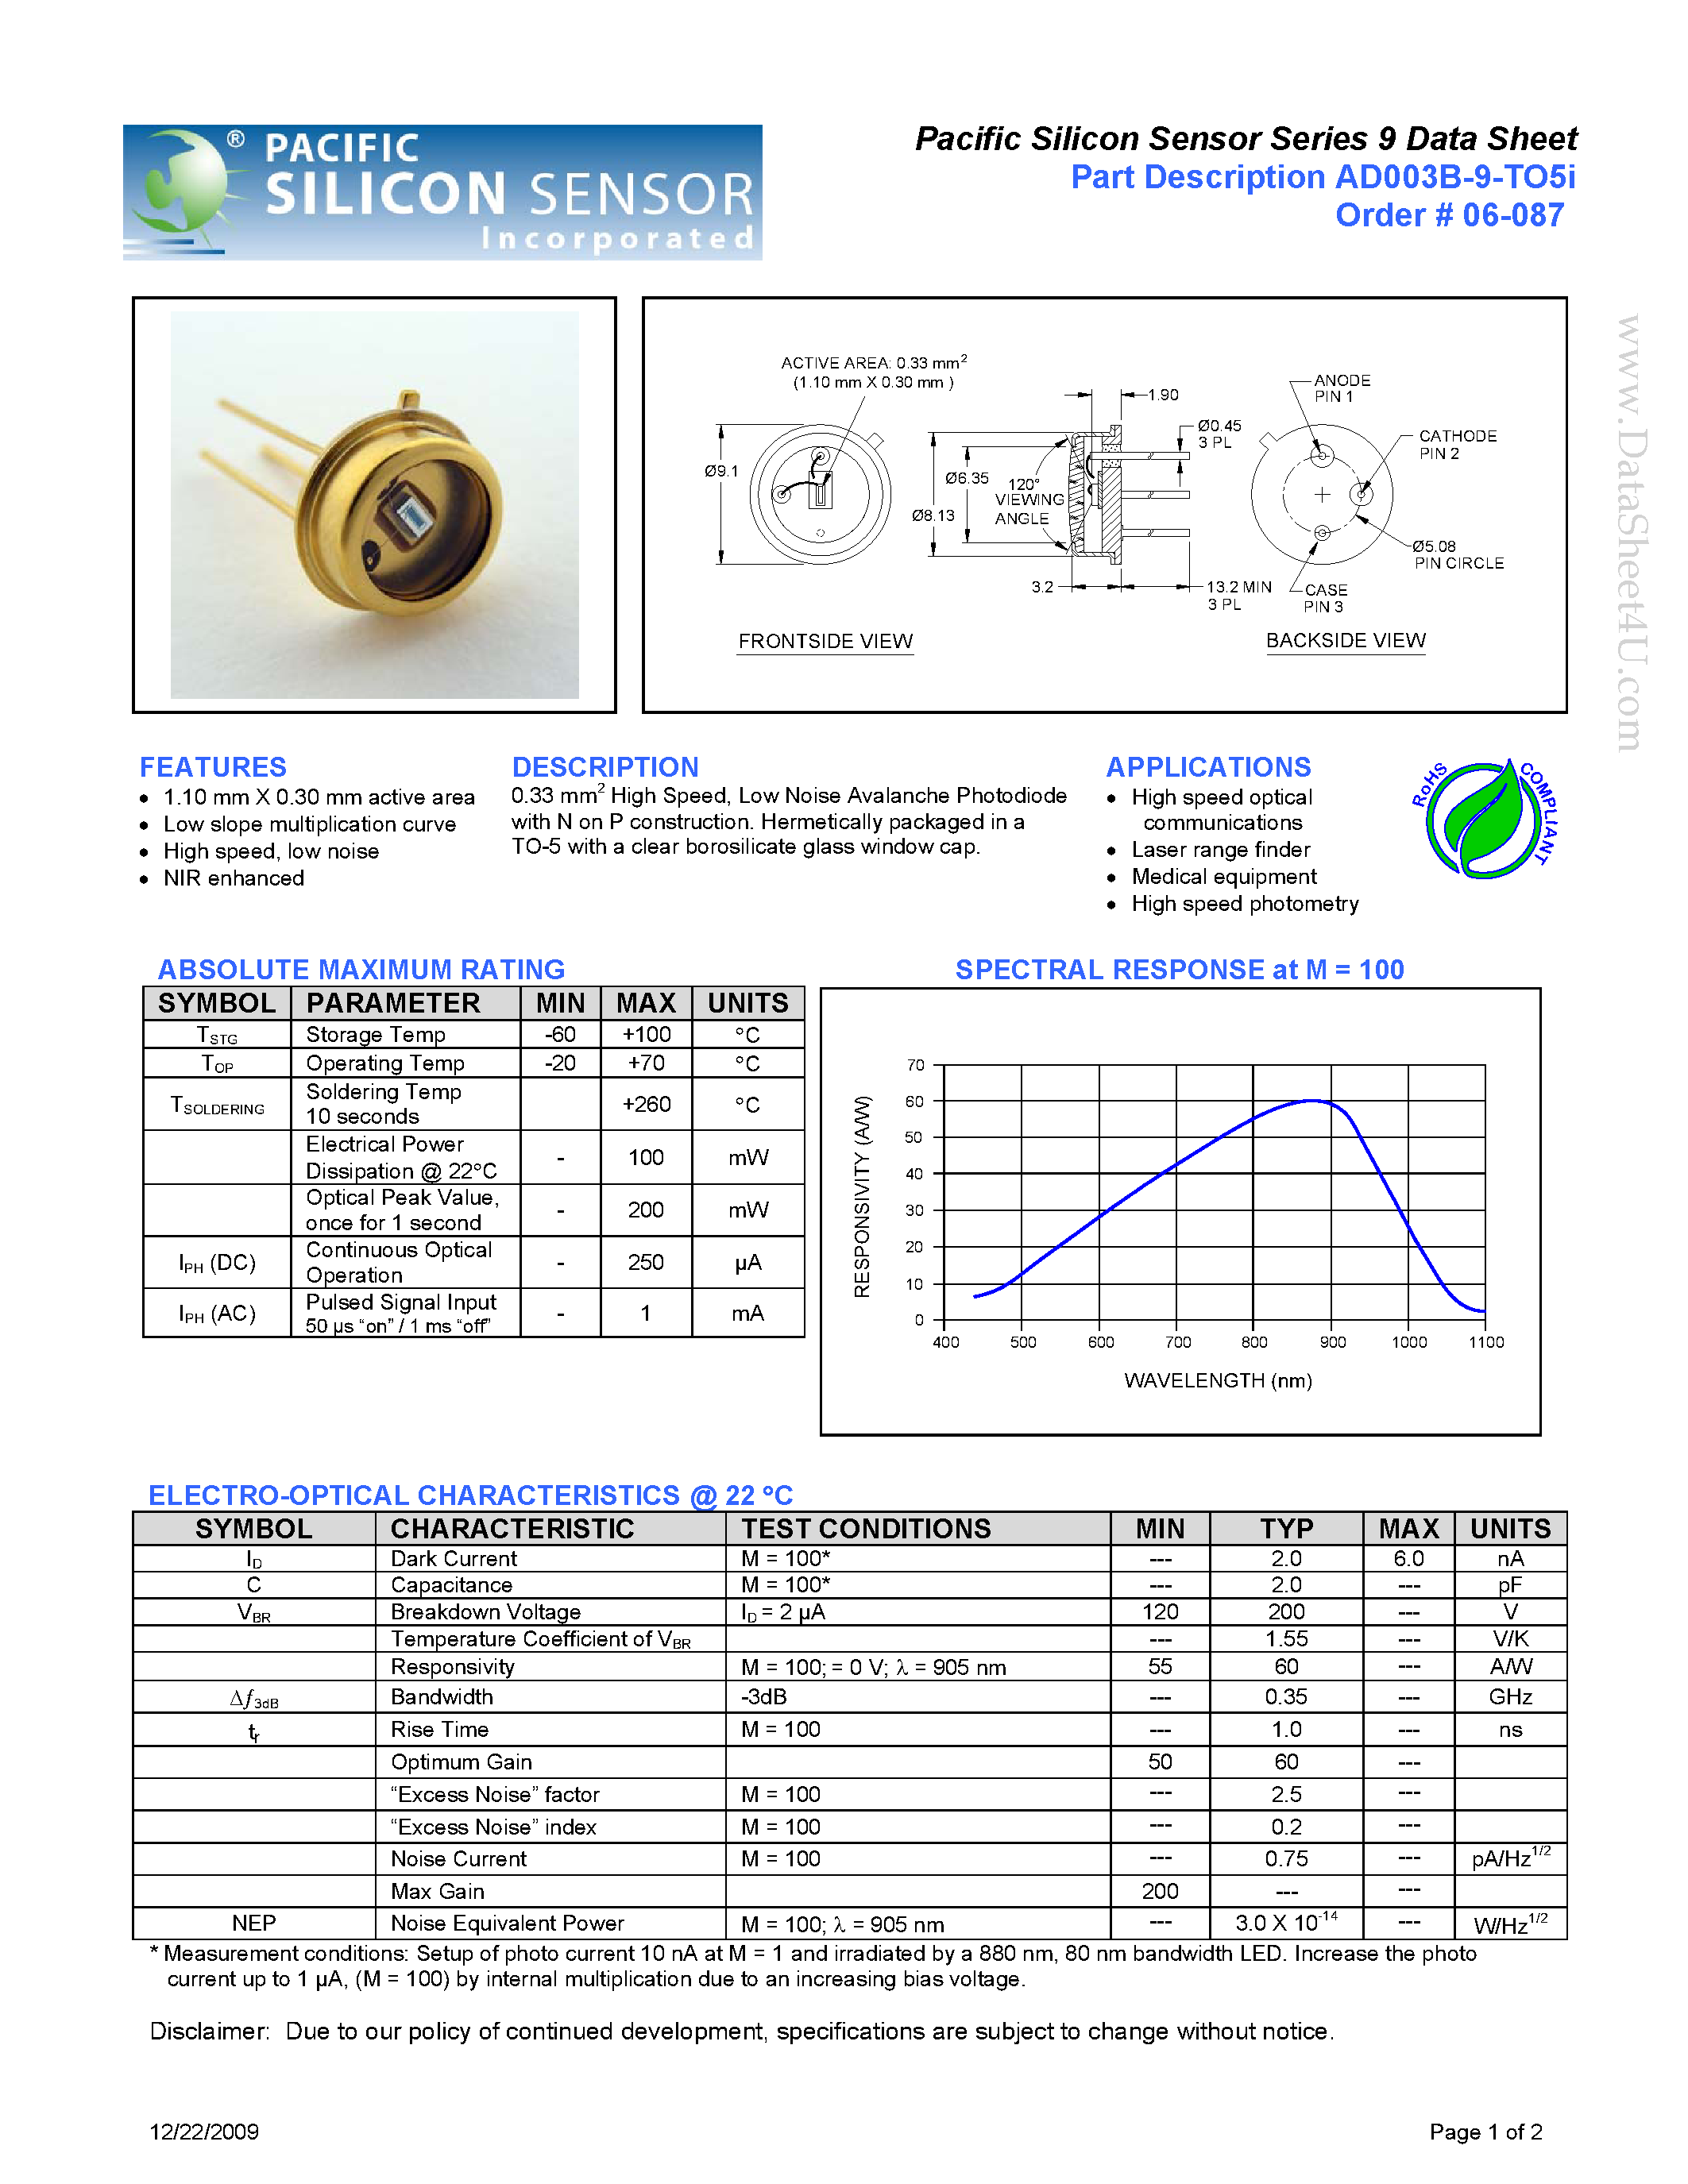 Datasheet AD003B-9-TO5I - Pacific Silicon Sensor page 1